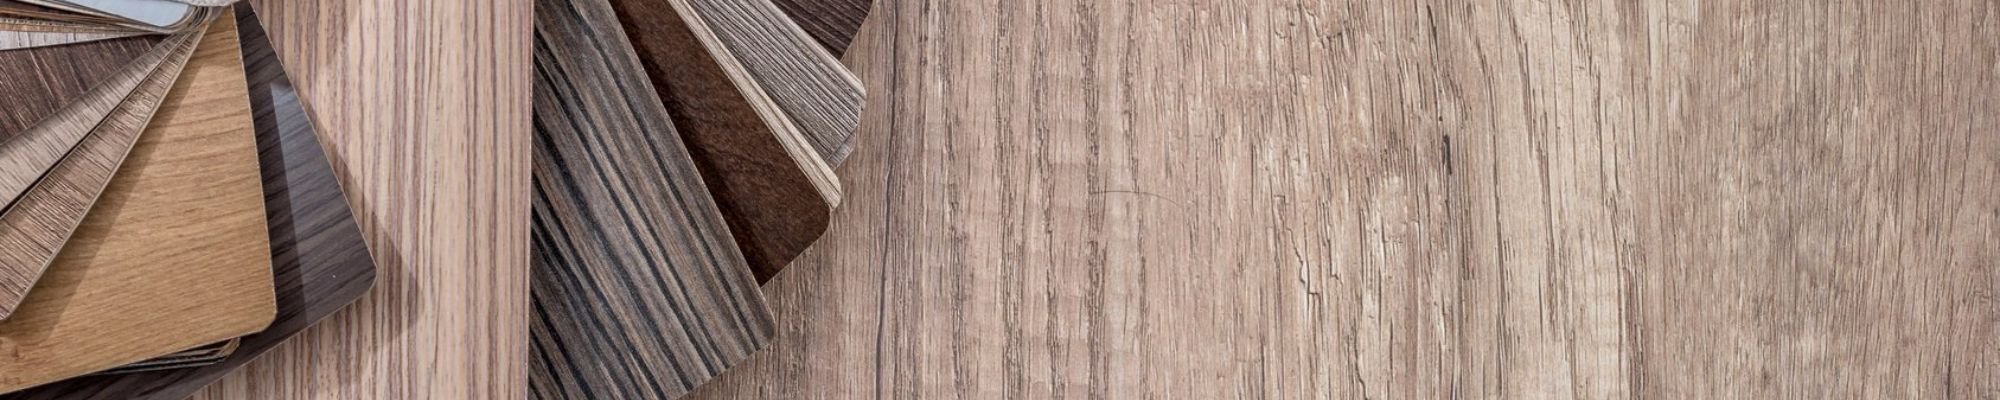 Hardwood flooring samples | Altimate Flooring | Rapid City, SD